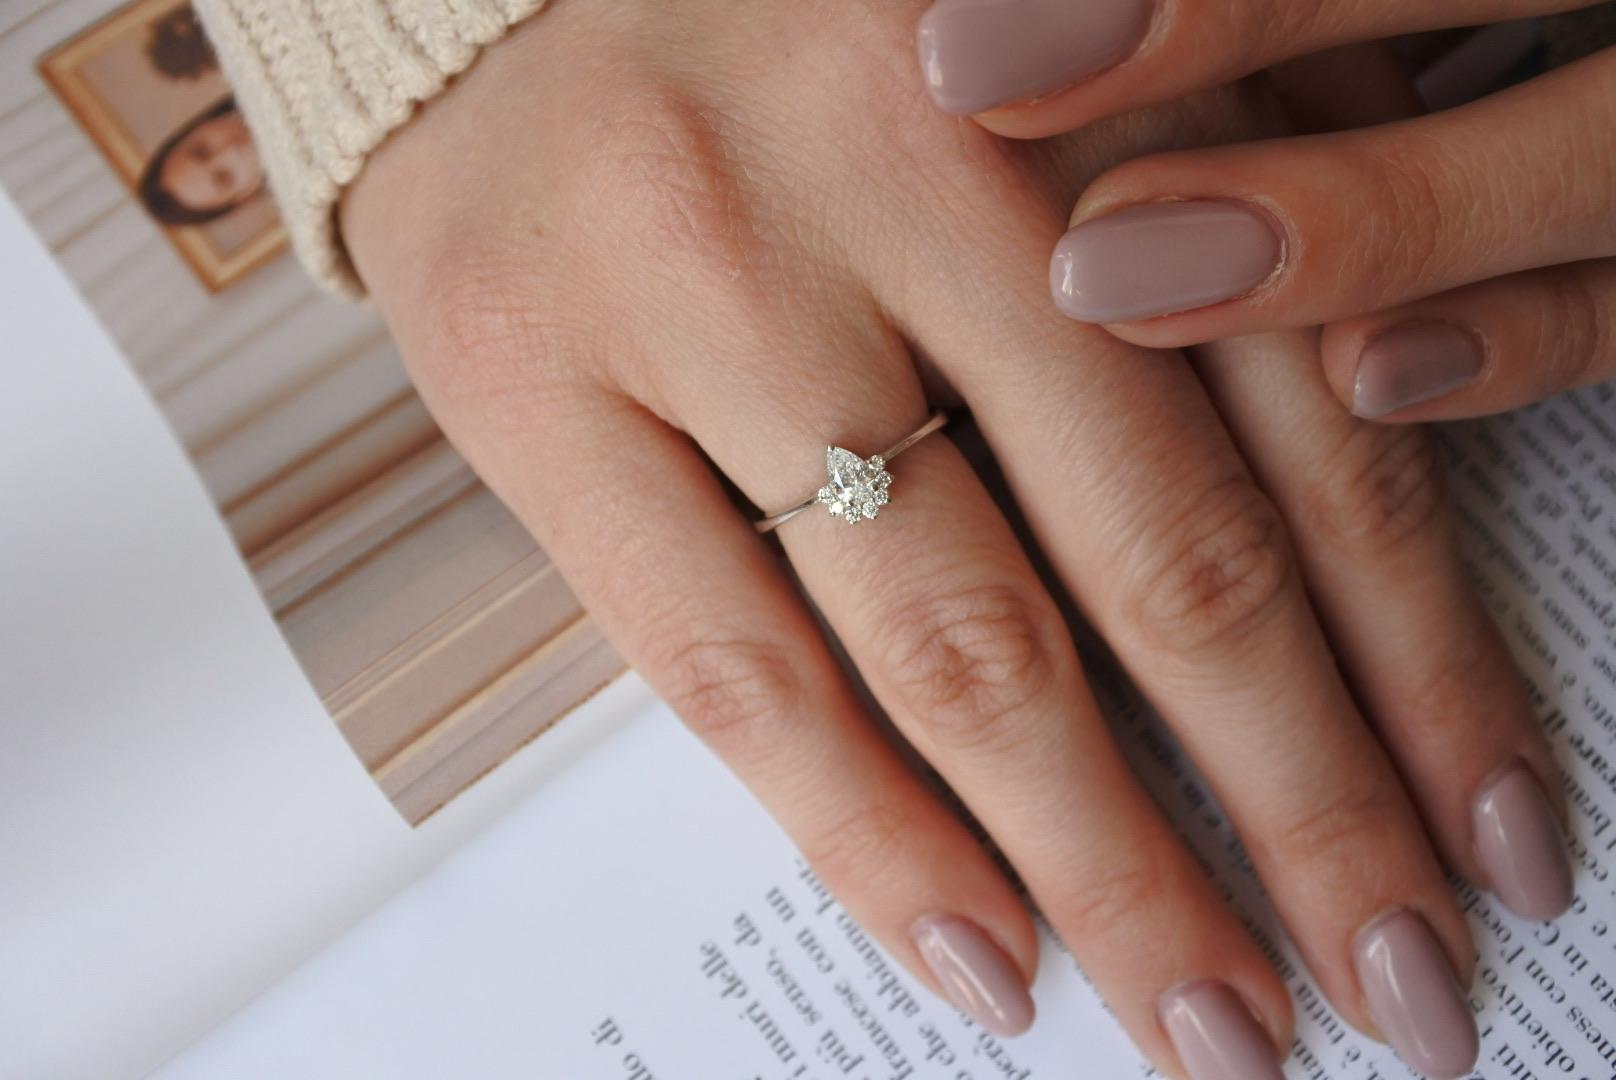 1.5 carat pear shaped diamond ring